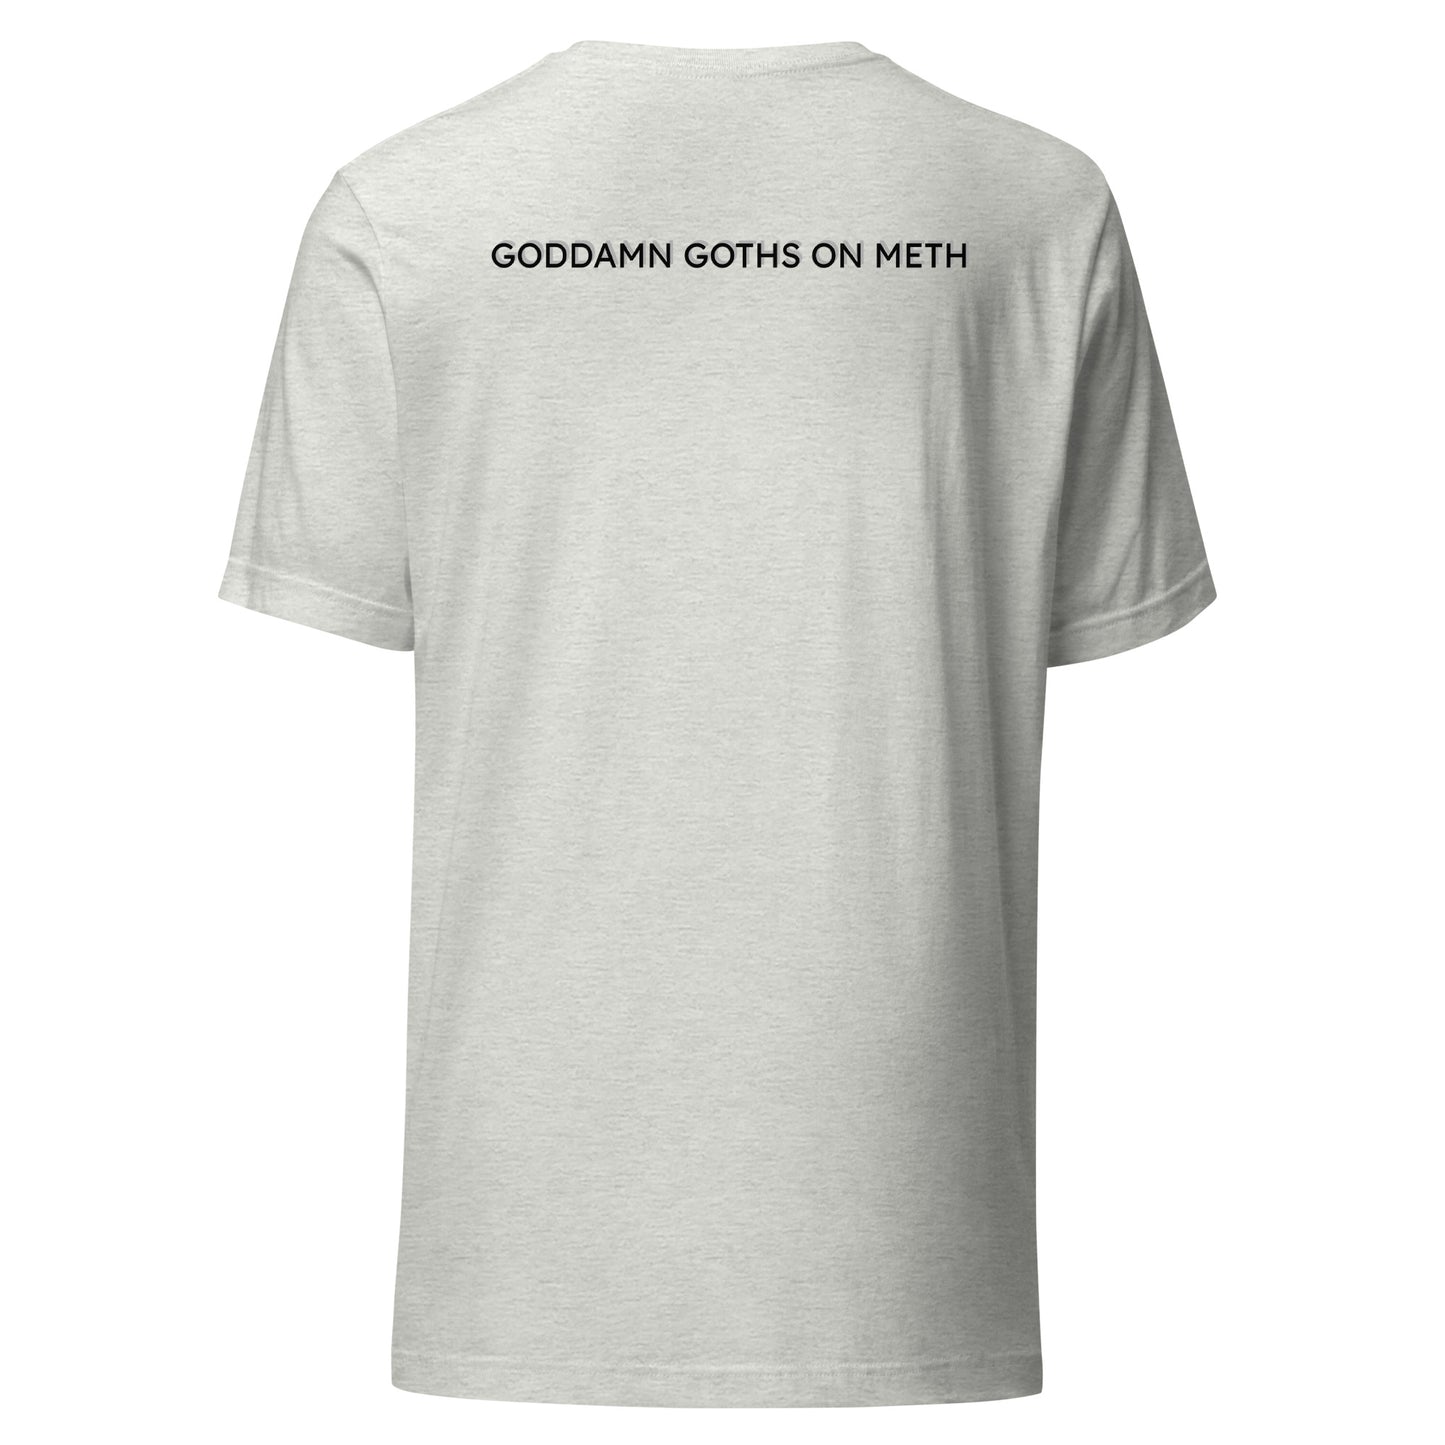 TANG METHOD DONG MOSH - Unisex t-shirt